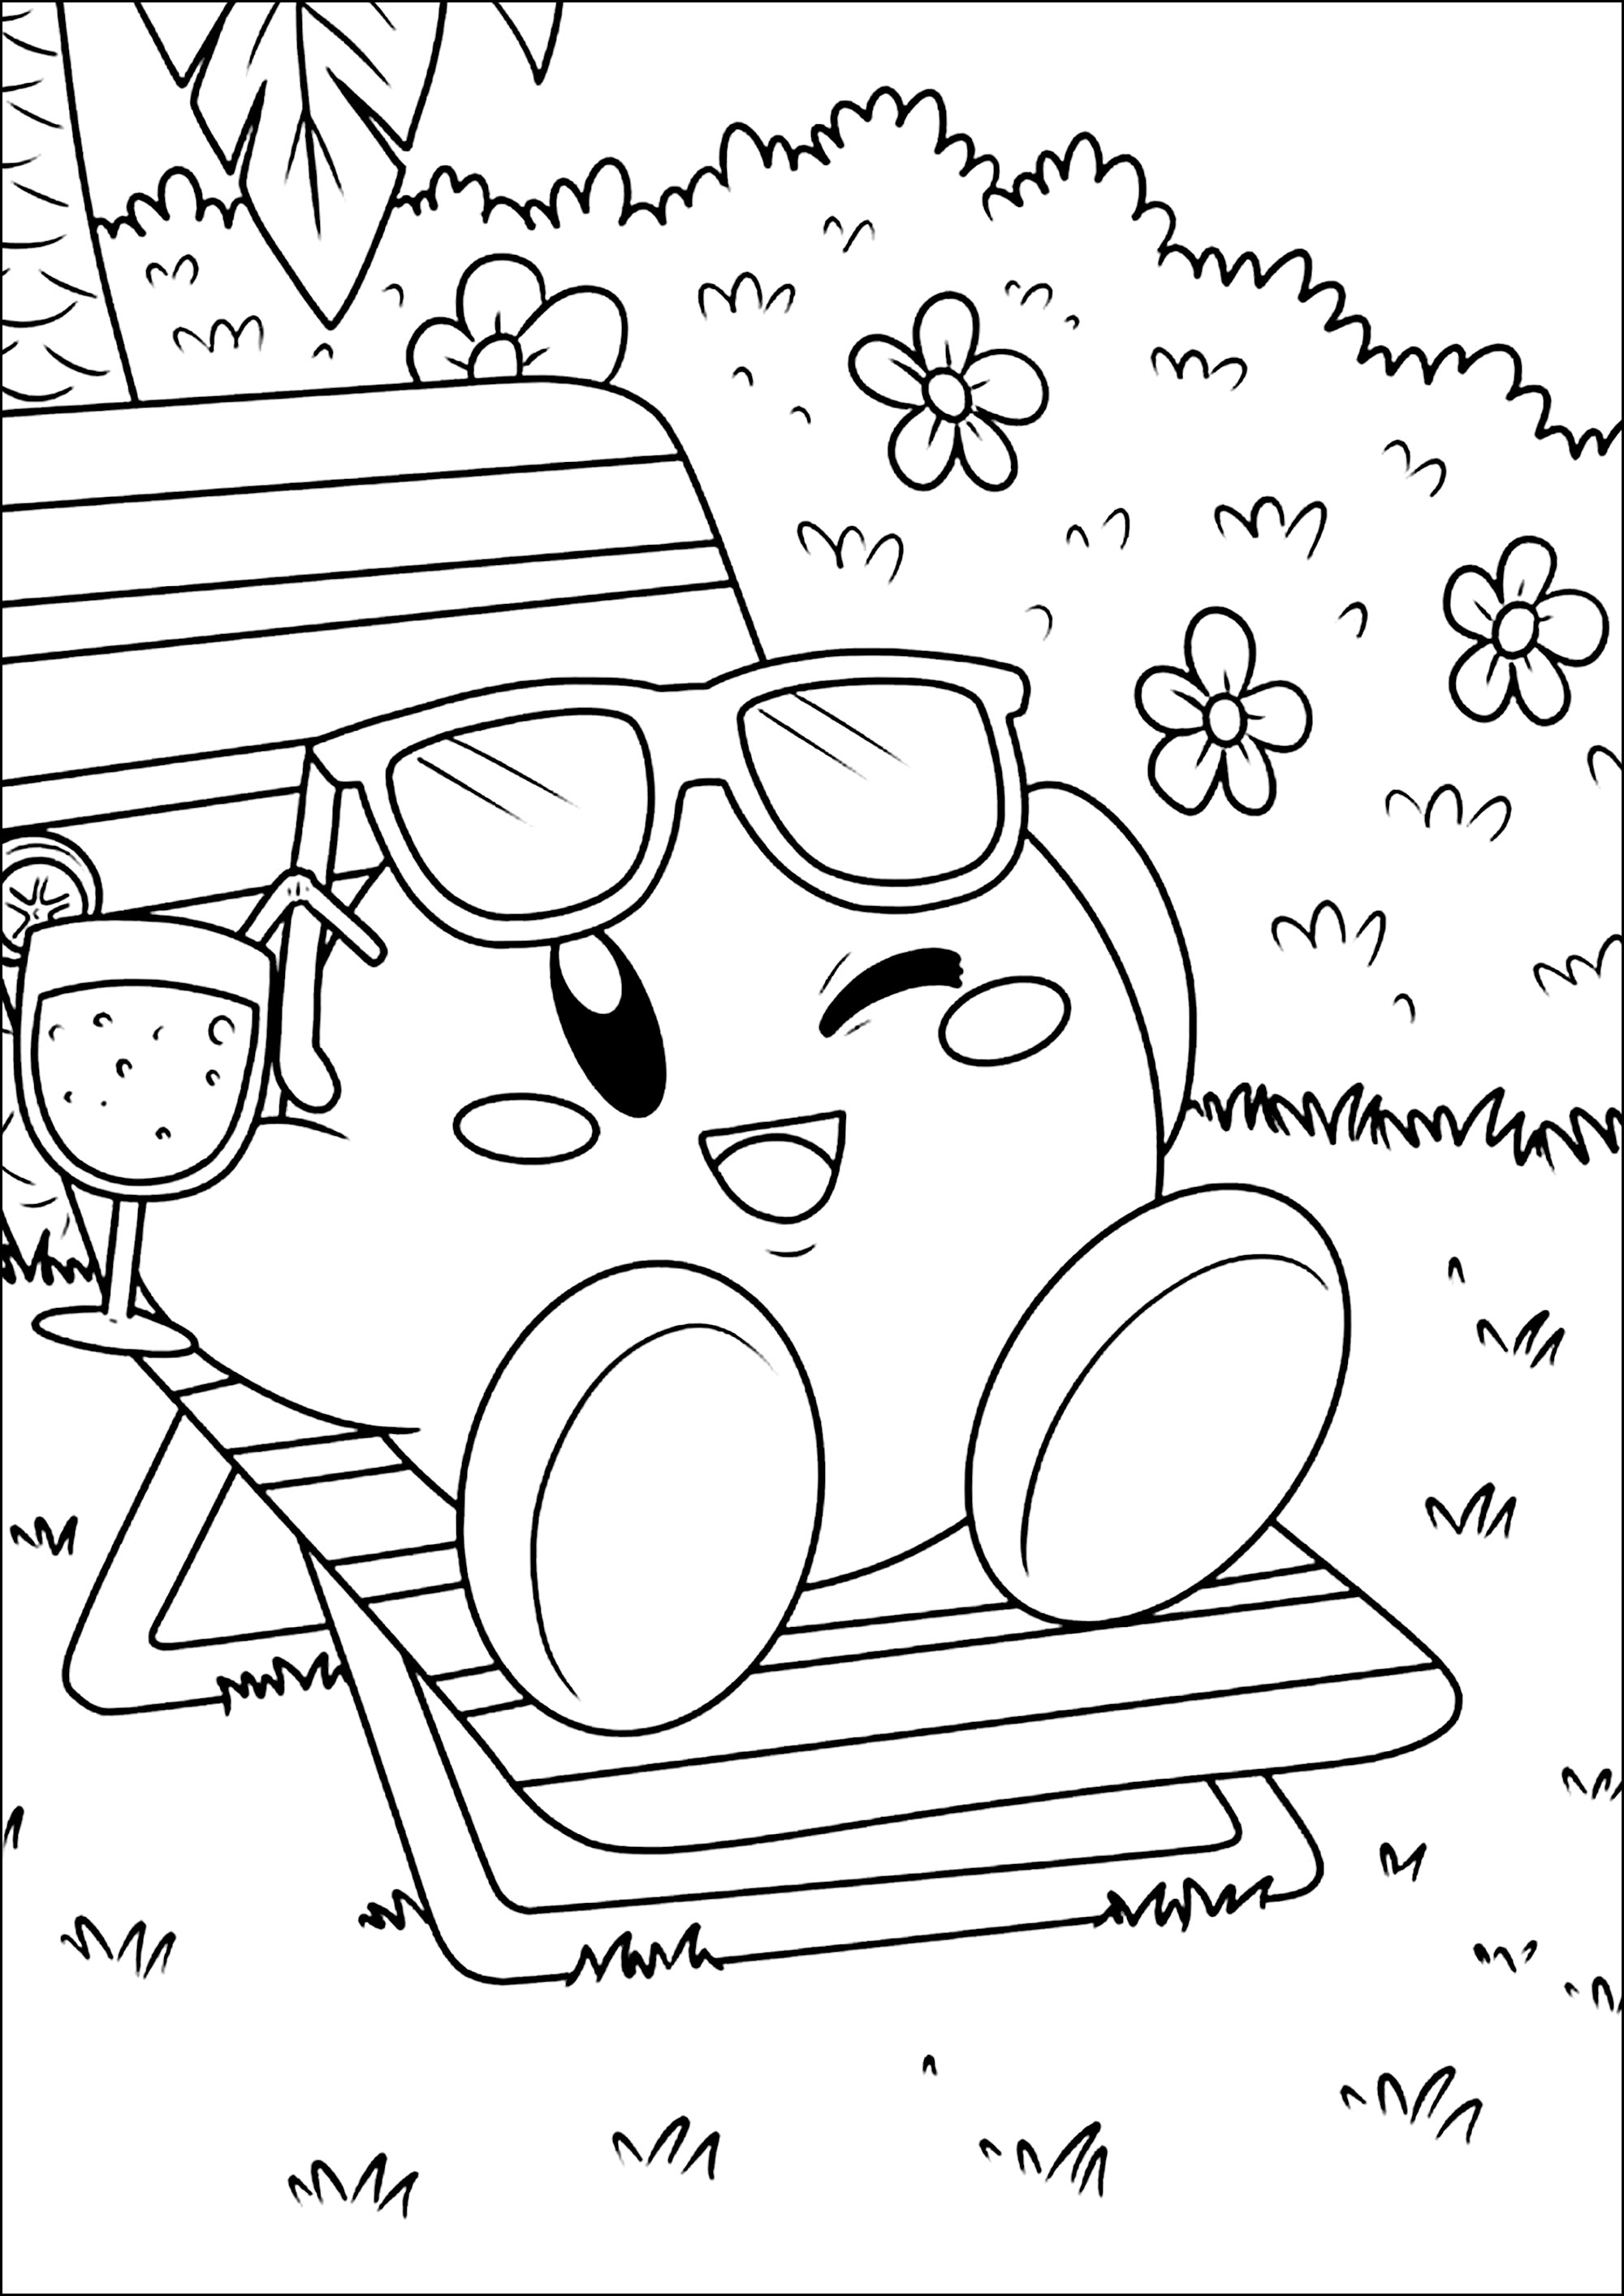 Kirby se détend dans son jardin